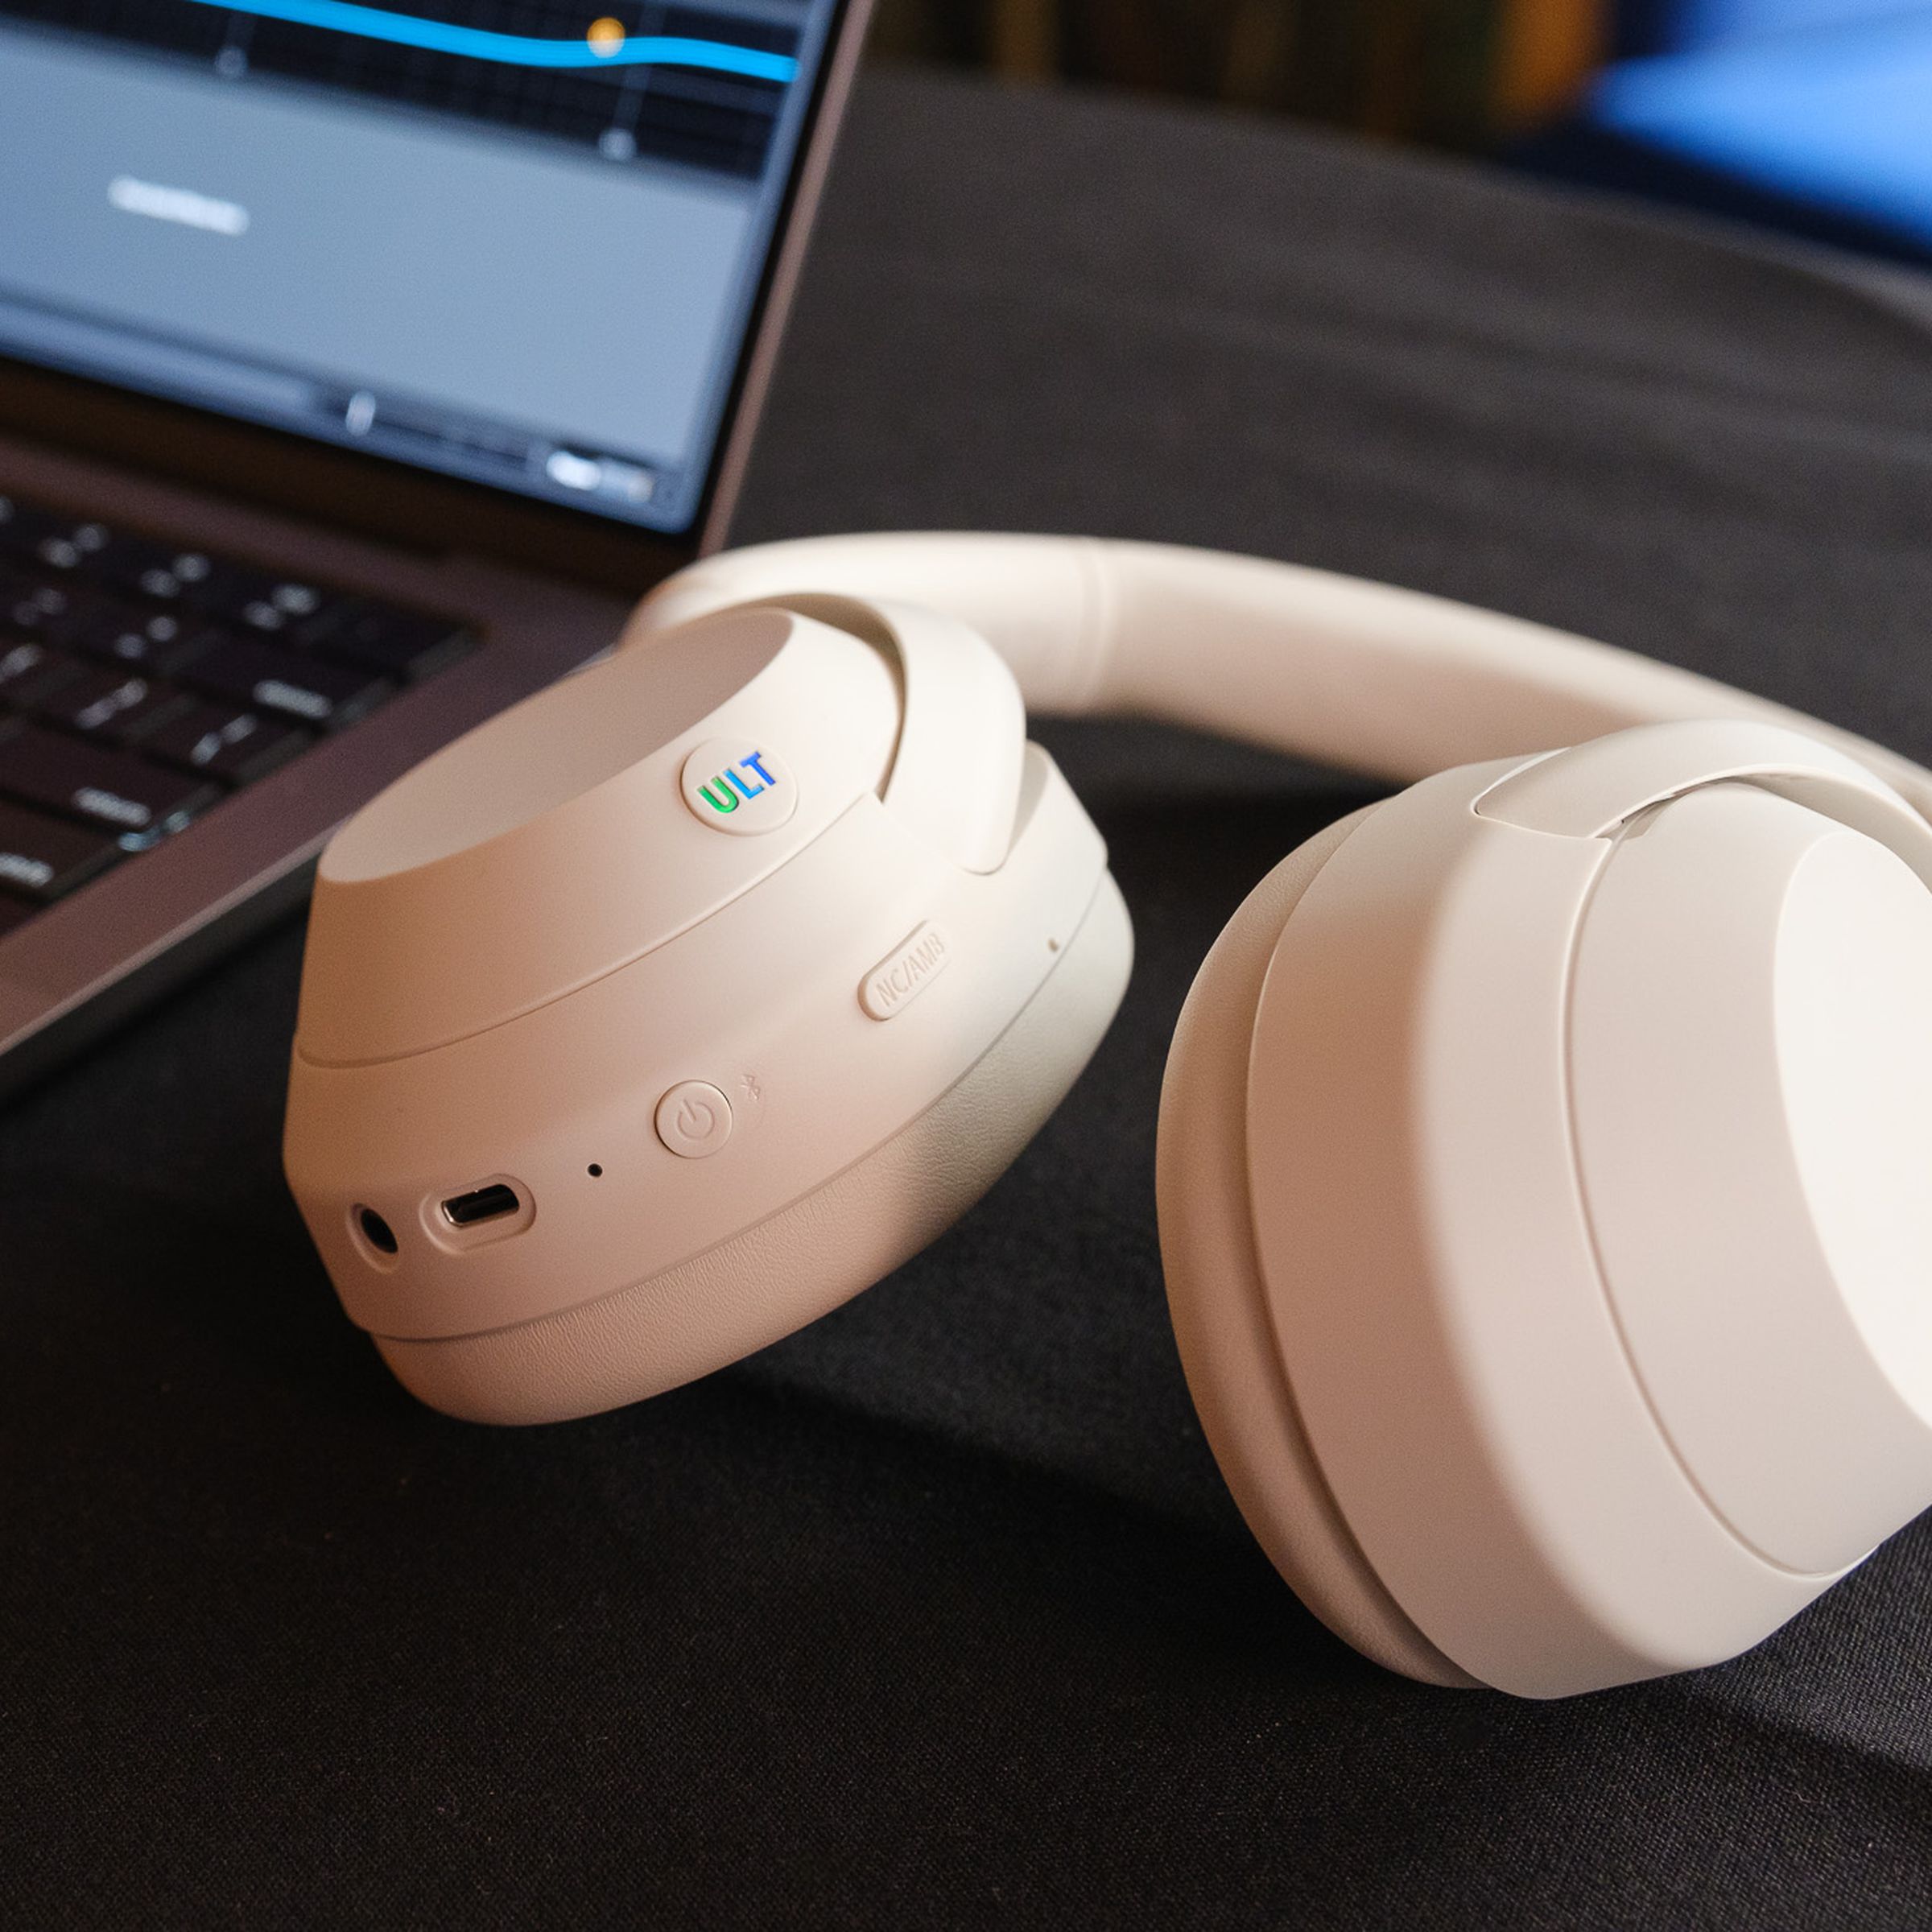 An image of Sony’s ULT Wear headphones.